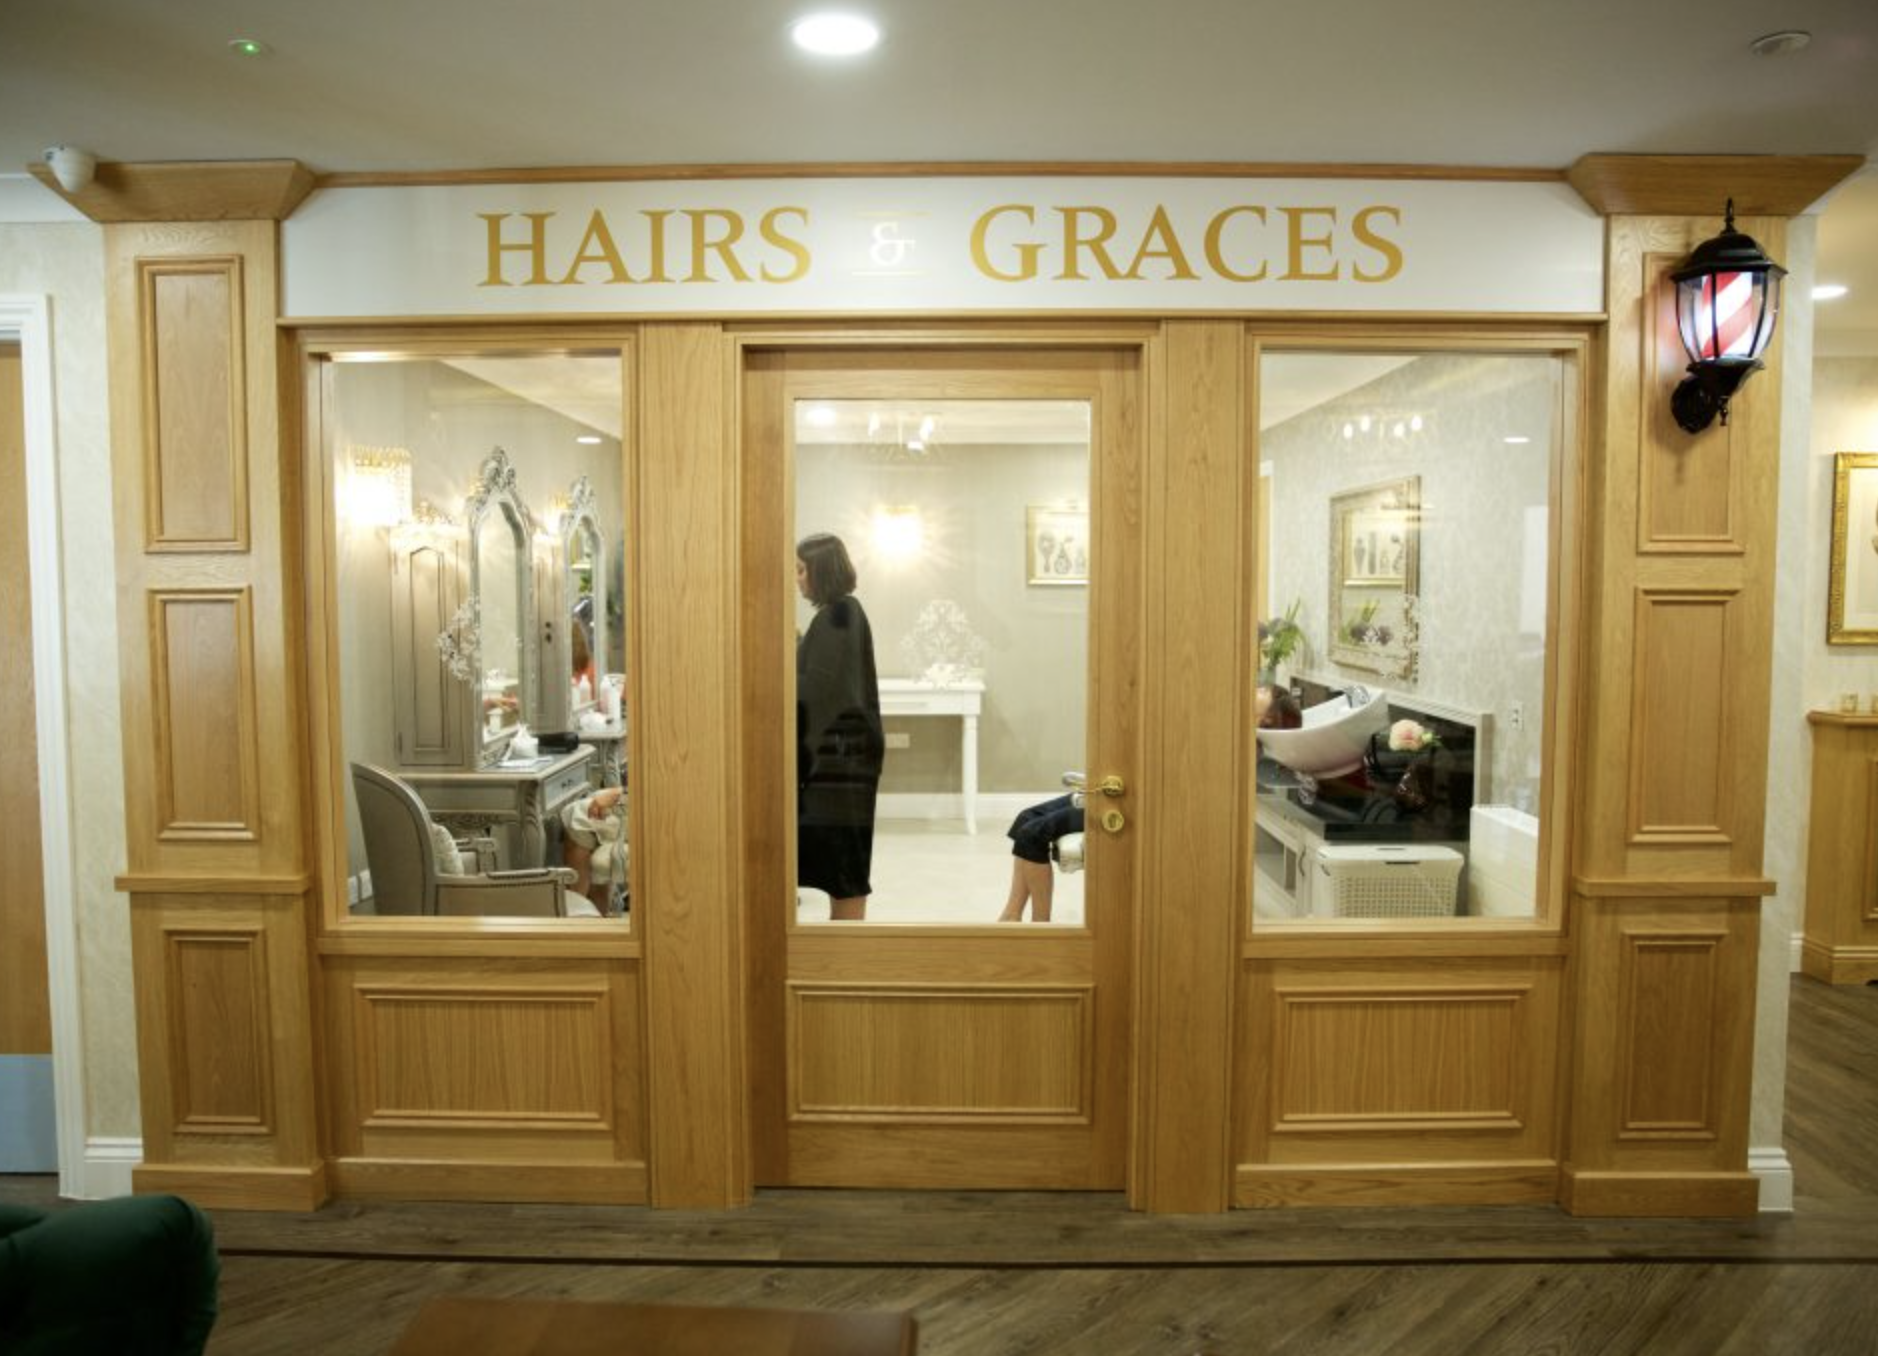 Hair Salon of Carlton Court care home in Barnet, London